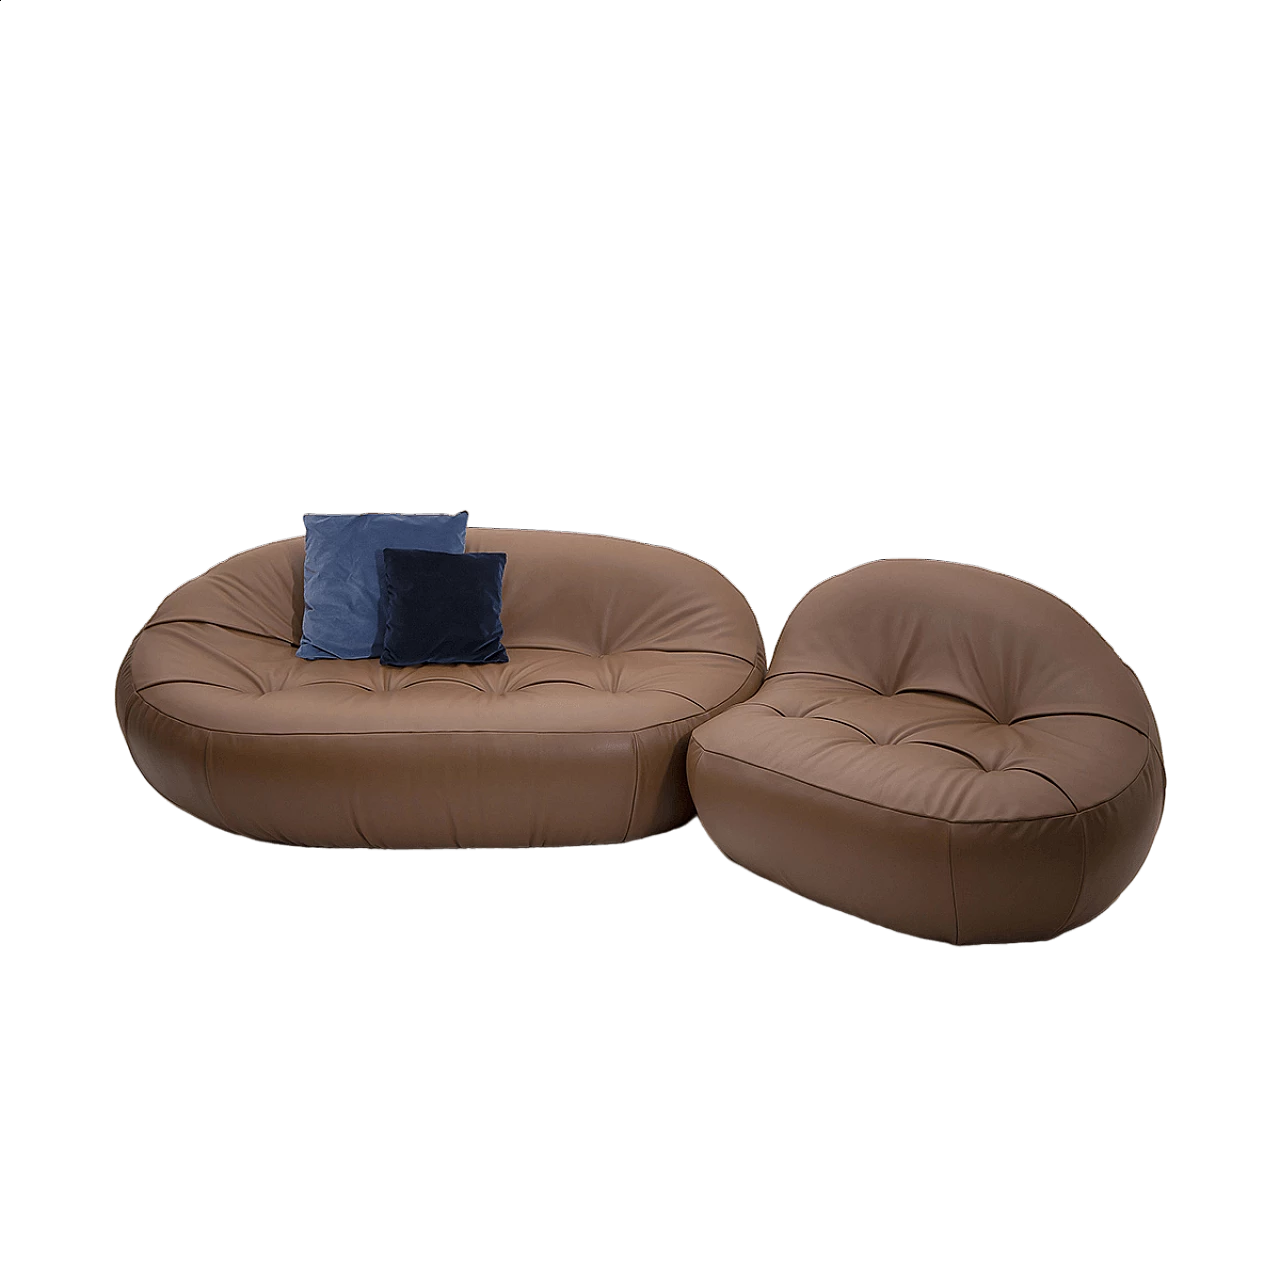 Plumpstones brown capitonné leather sofa by spHaus 5